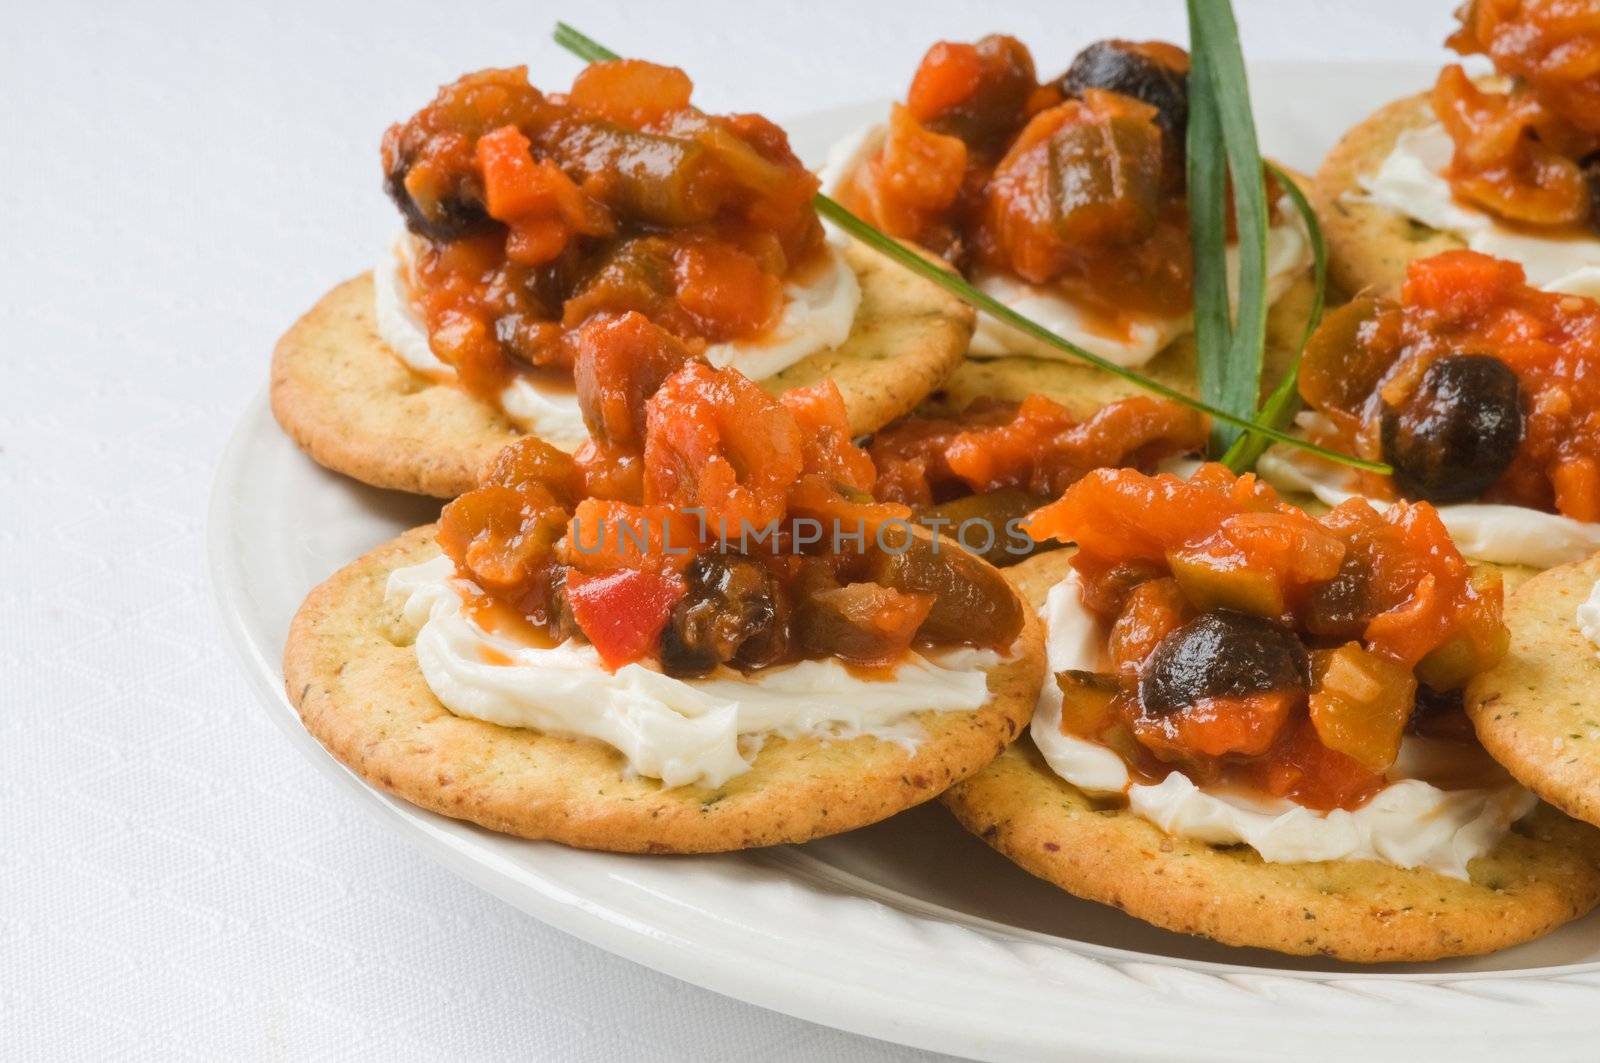 Mediterranean Appetizers by billberryphotography